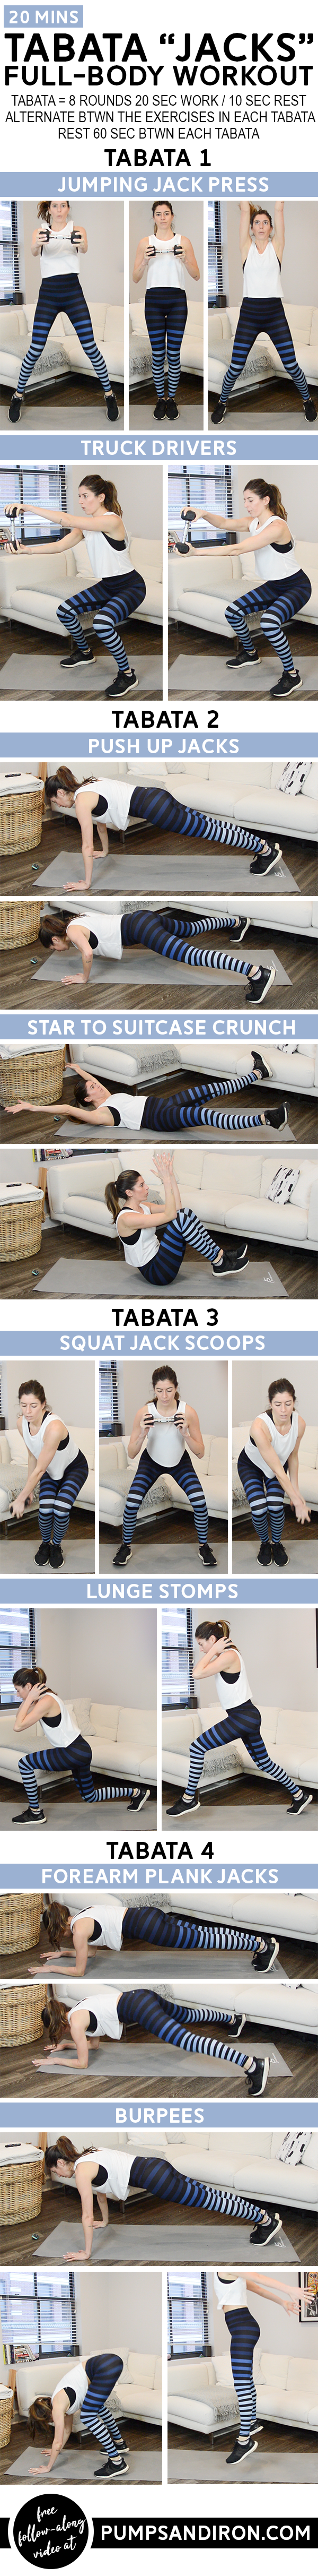 Tabata "Jacks" Workout - This tabata workout will take you just under 20 minutes. #tabata #hiit #workout #fitness https://pumpsandiron.com